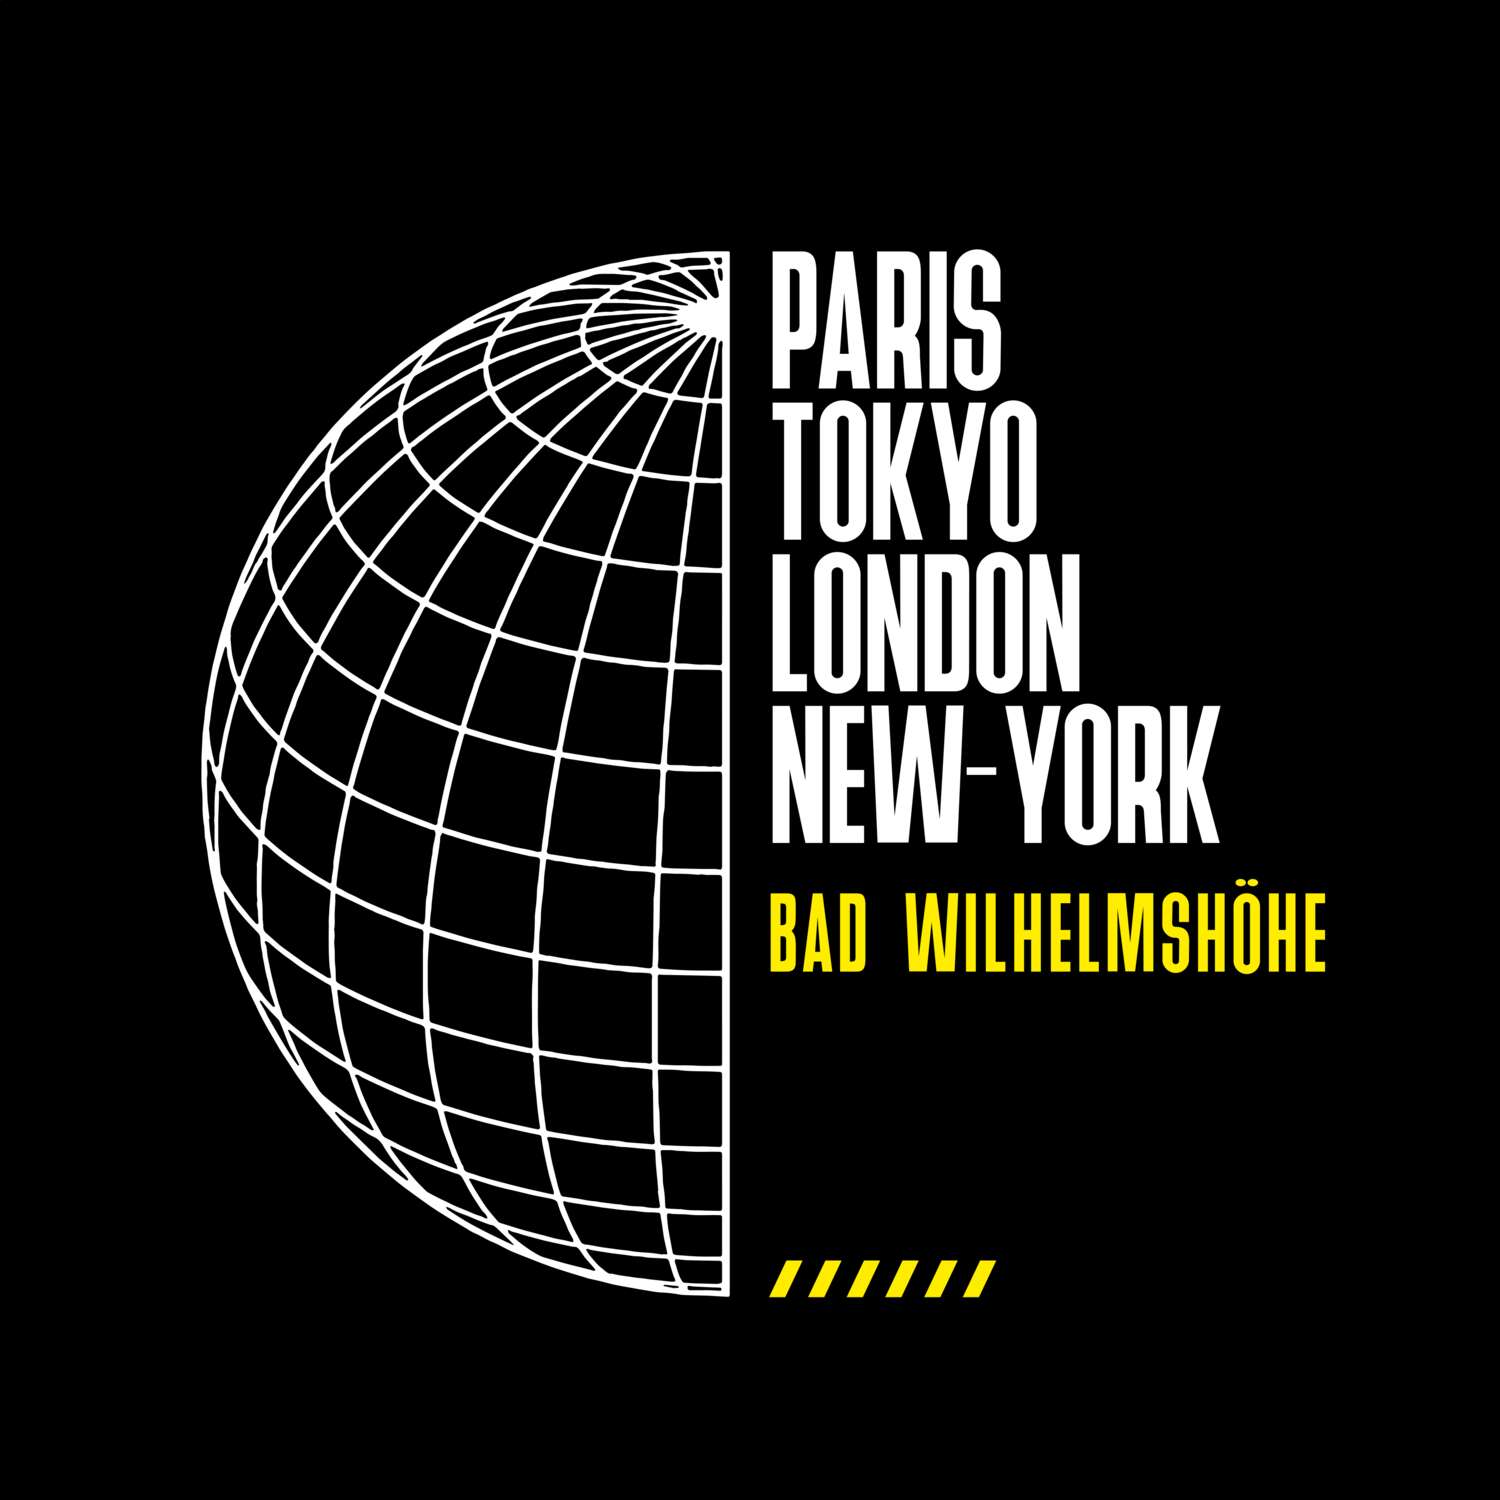 Bad Wilhelmshöhe T-Shirt »Paris Tokyo London«